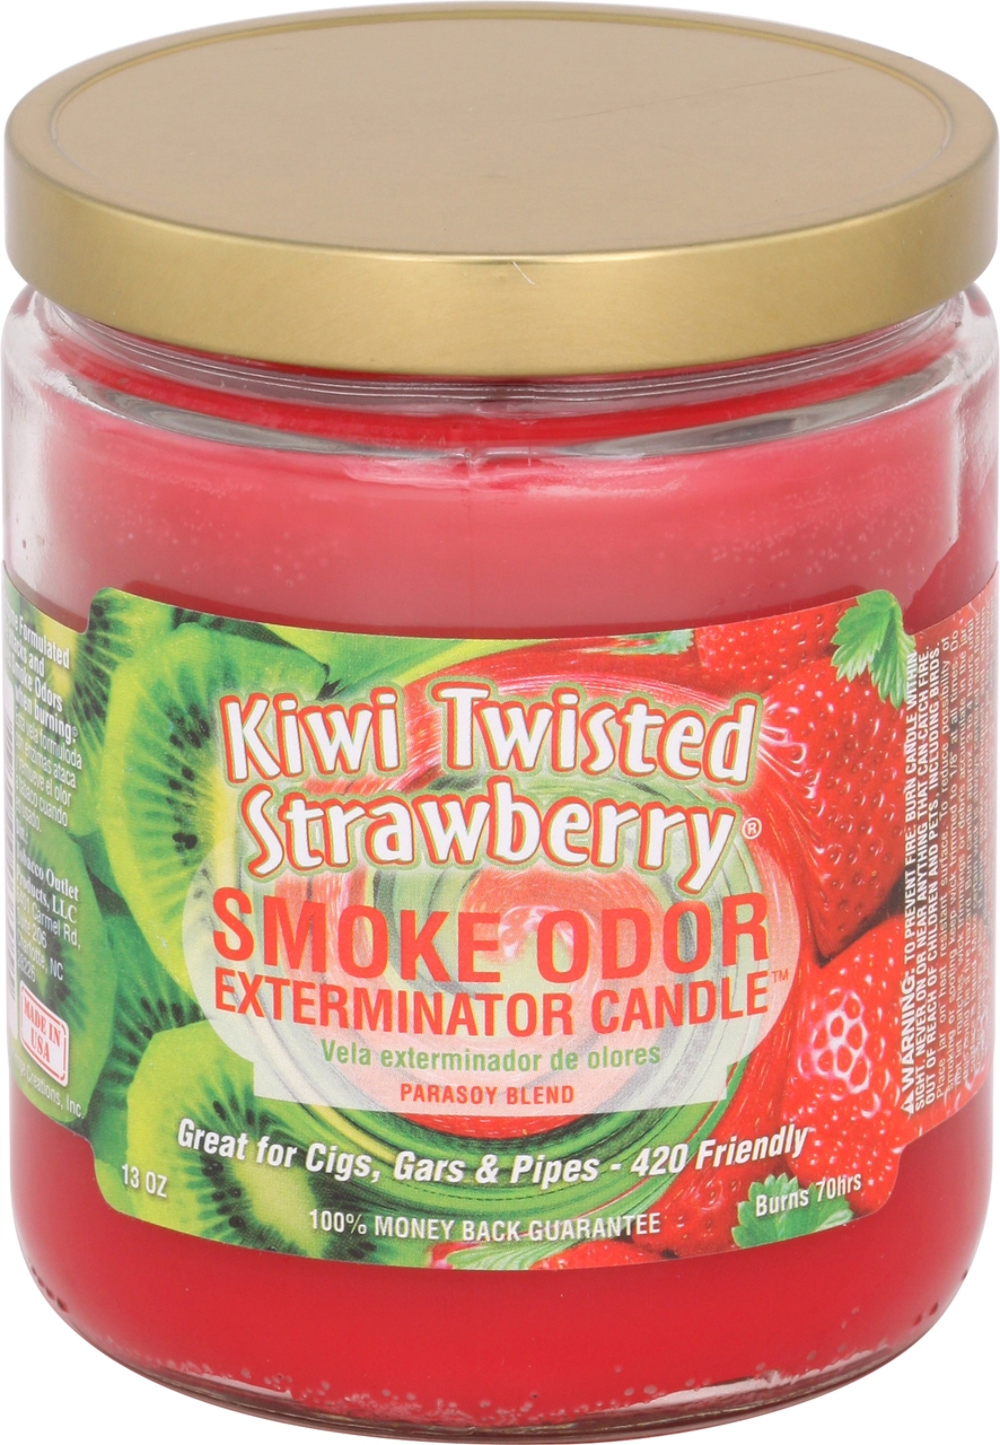 Kiwi Twisted Strawberry Smoke Exterminator Candle